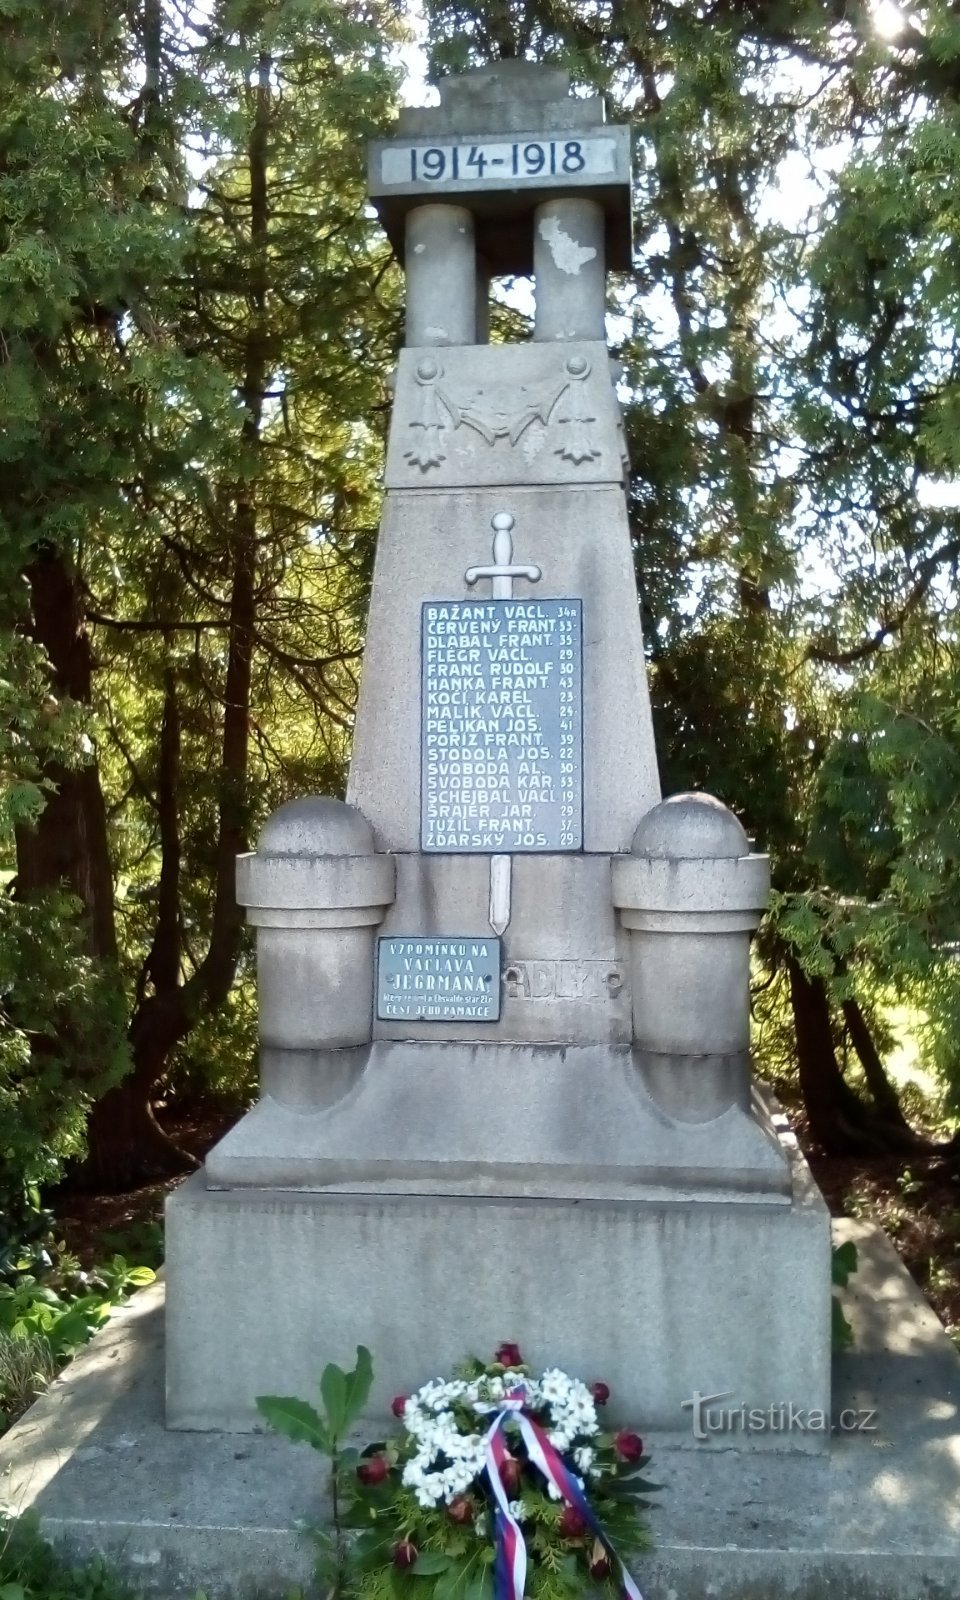 Monument to the fallen in Staré Máteřov